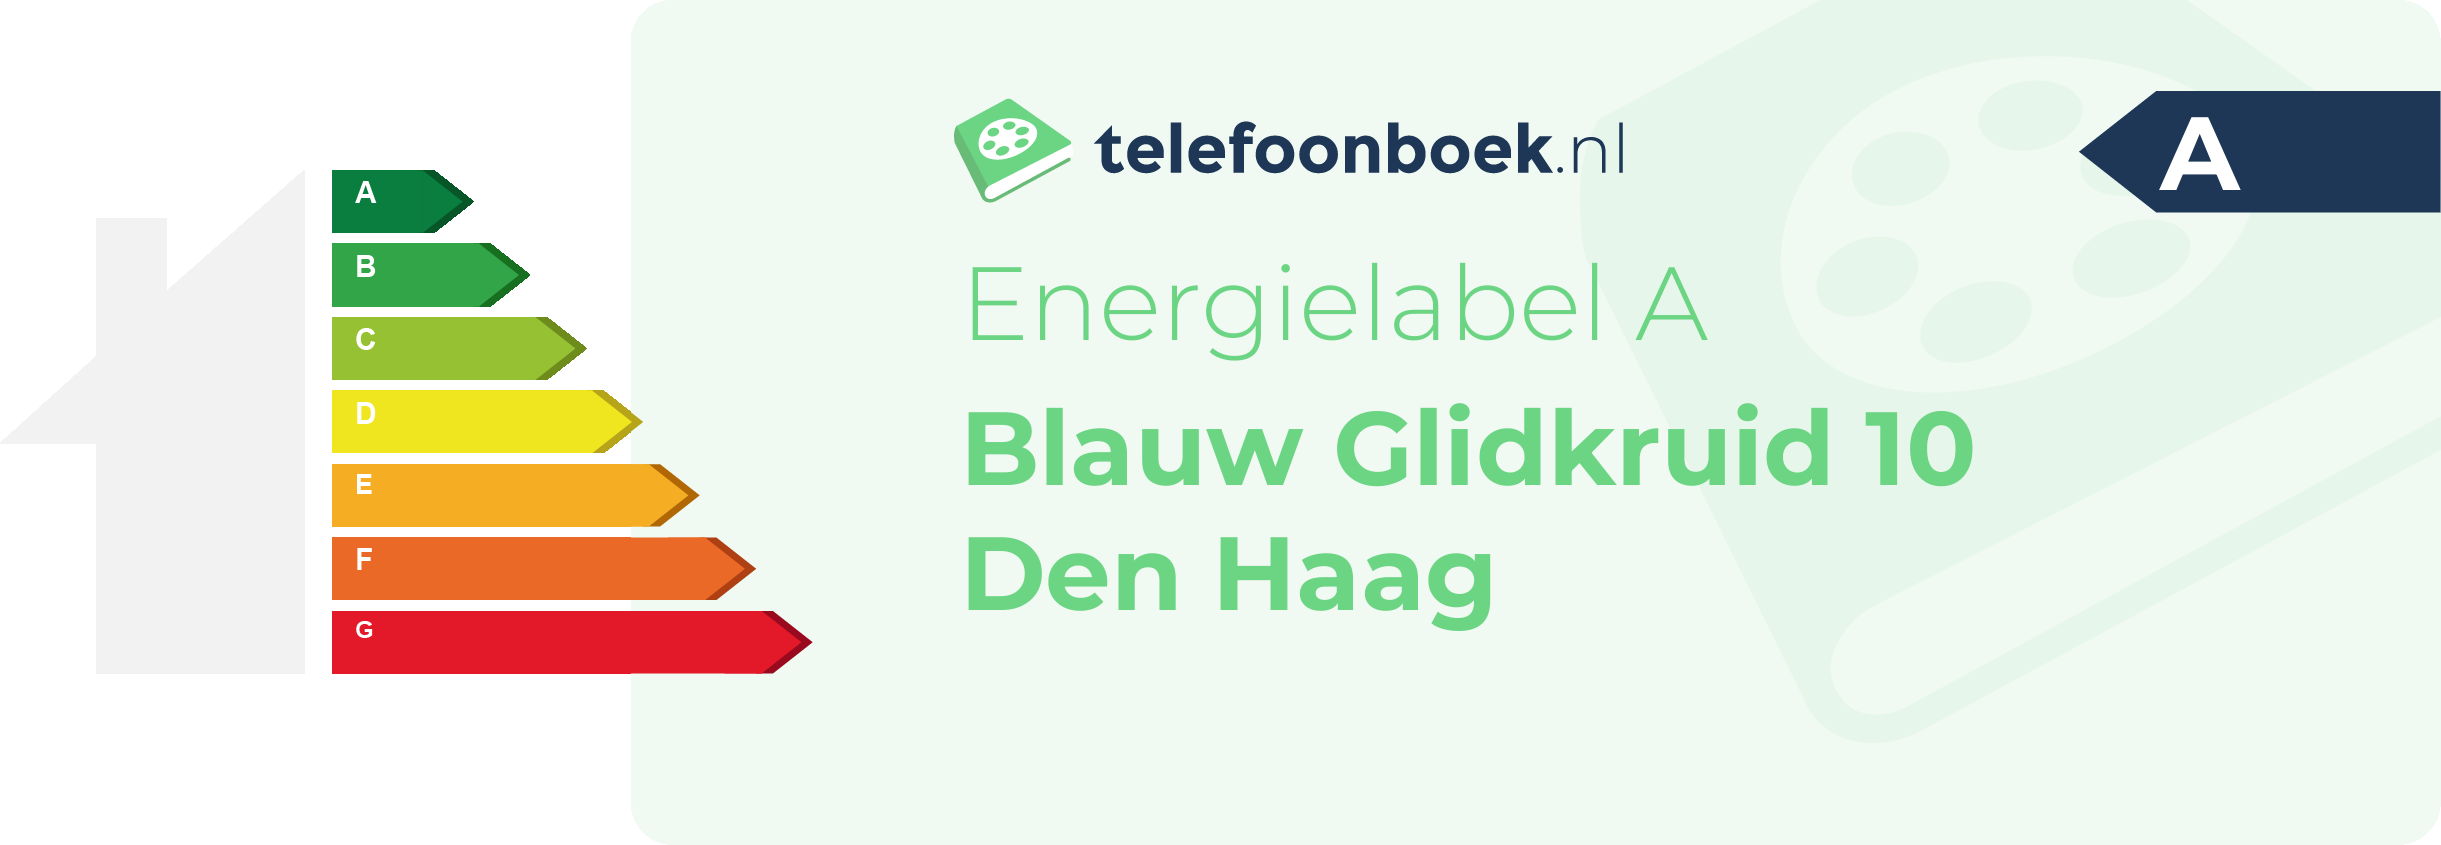 Energielabel Blauw Glidkruid 10 Den Haag